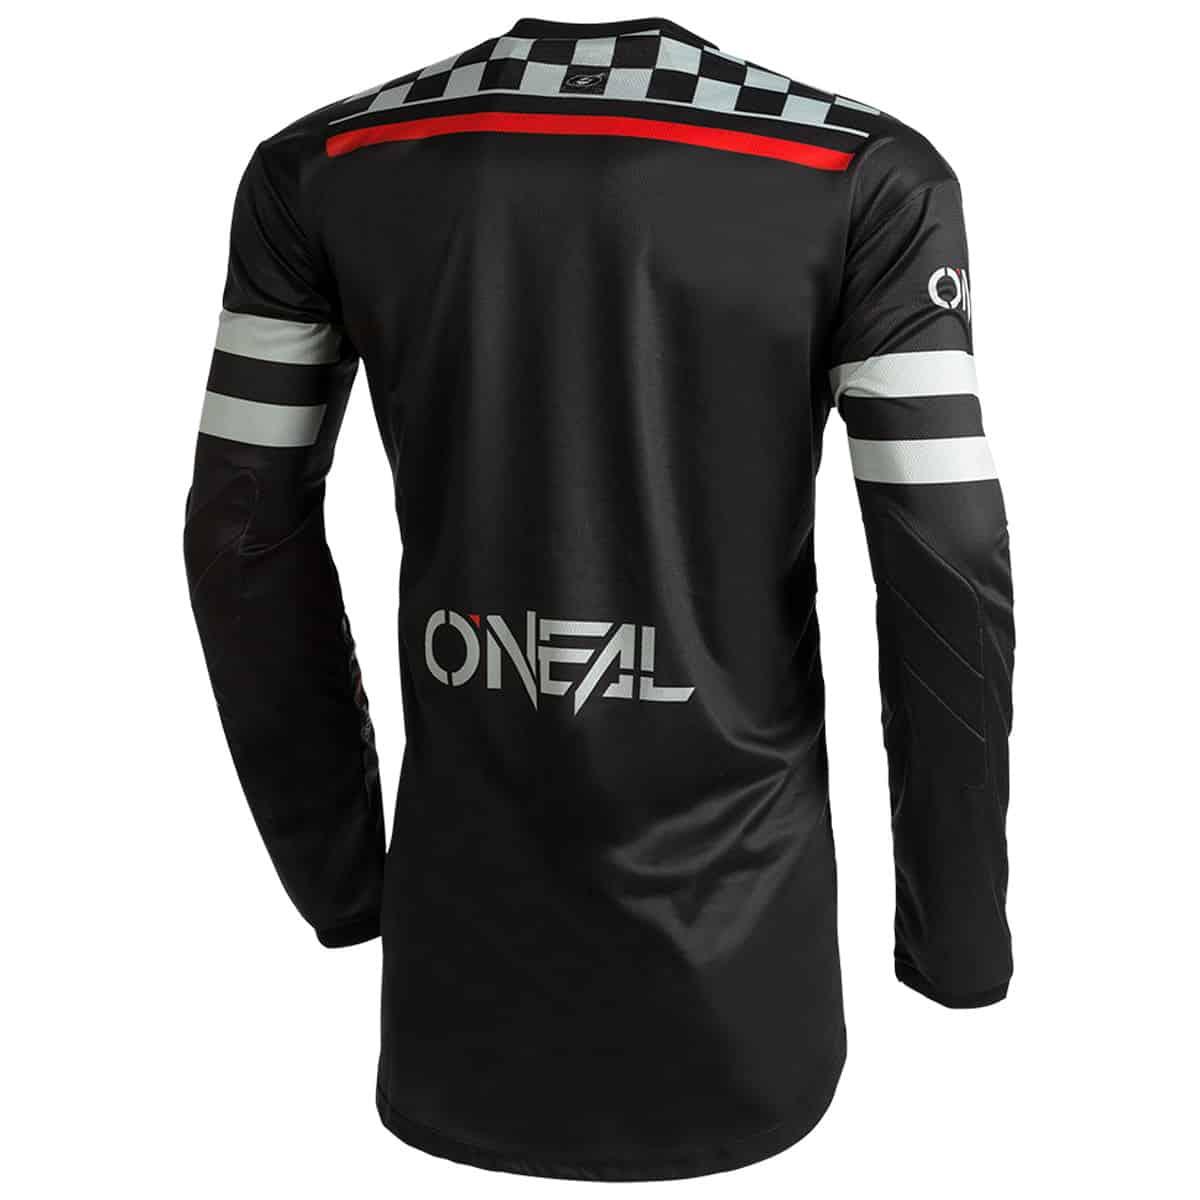 ONeal Element Factory Jersey - Offroad & Motocross Jerseys 4